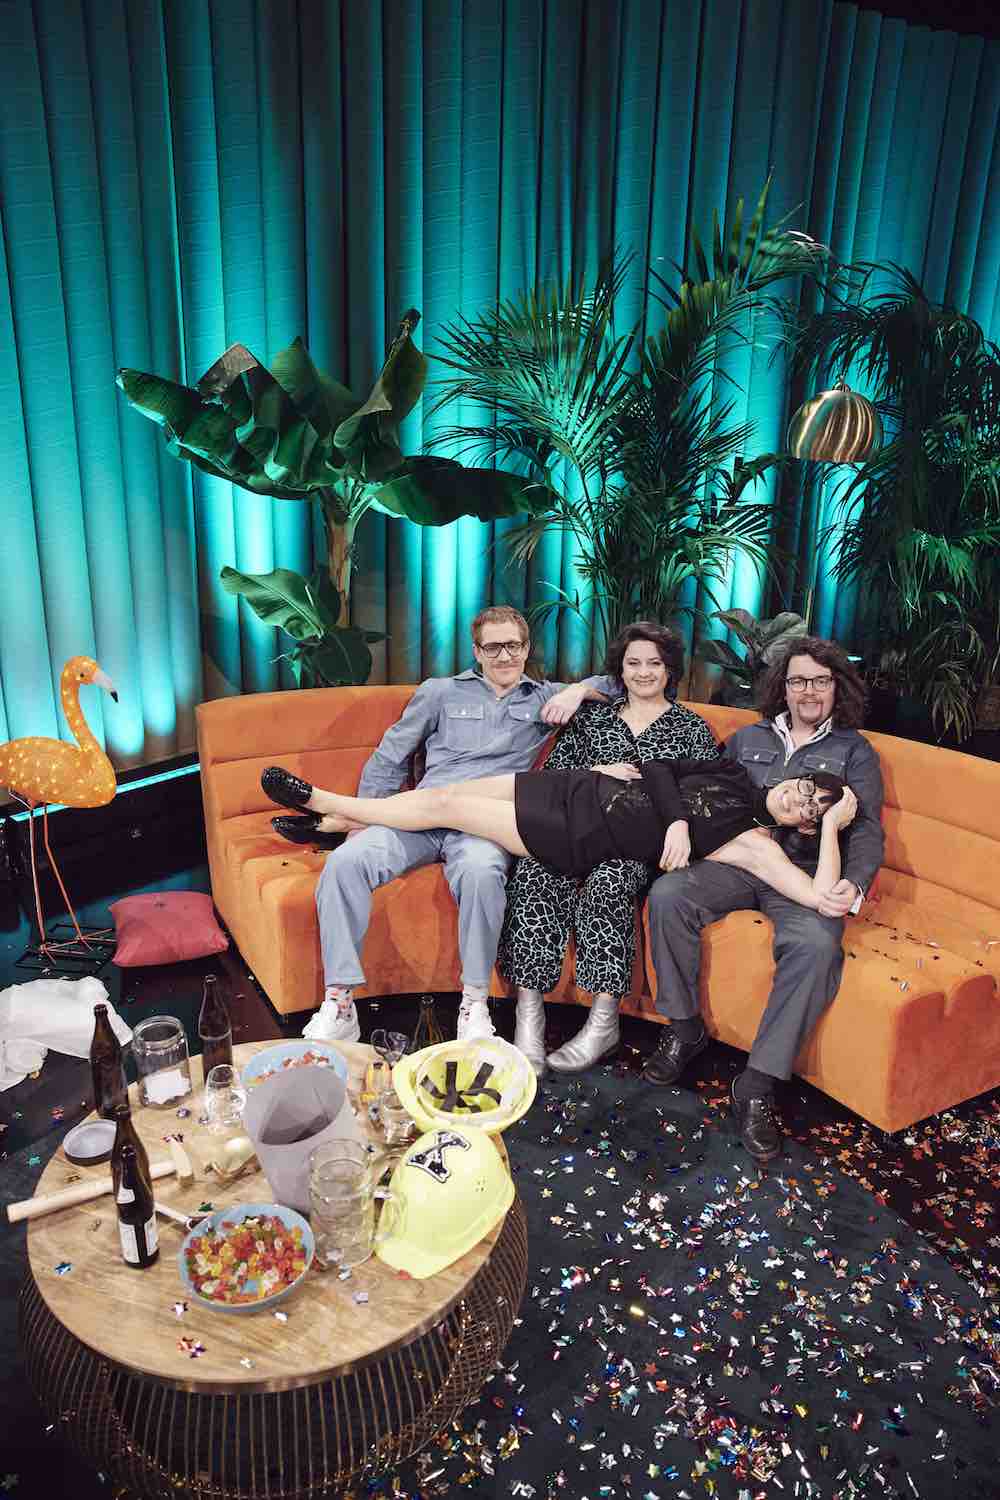 Manu, Maria, Flori auf oranger Couch, Eva liegt quer drauf.